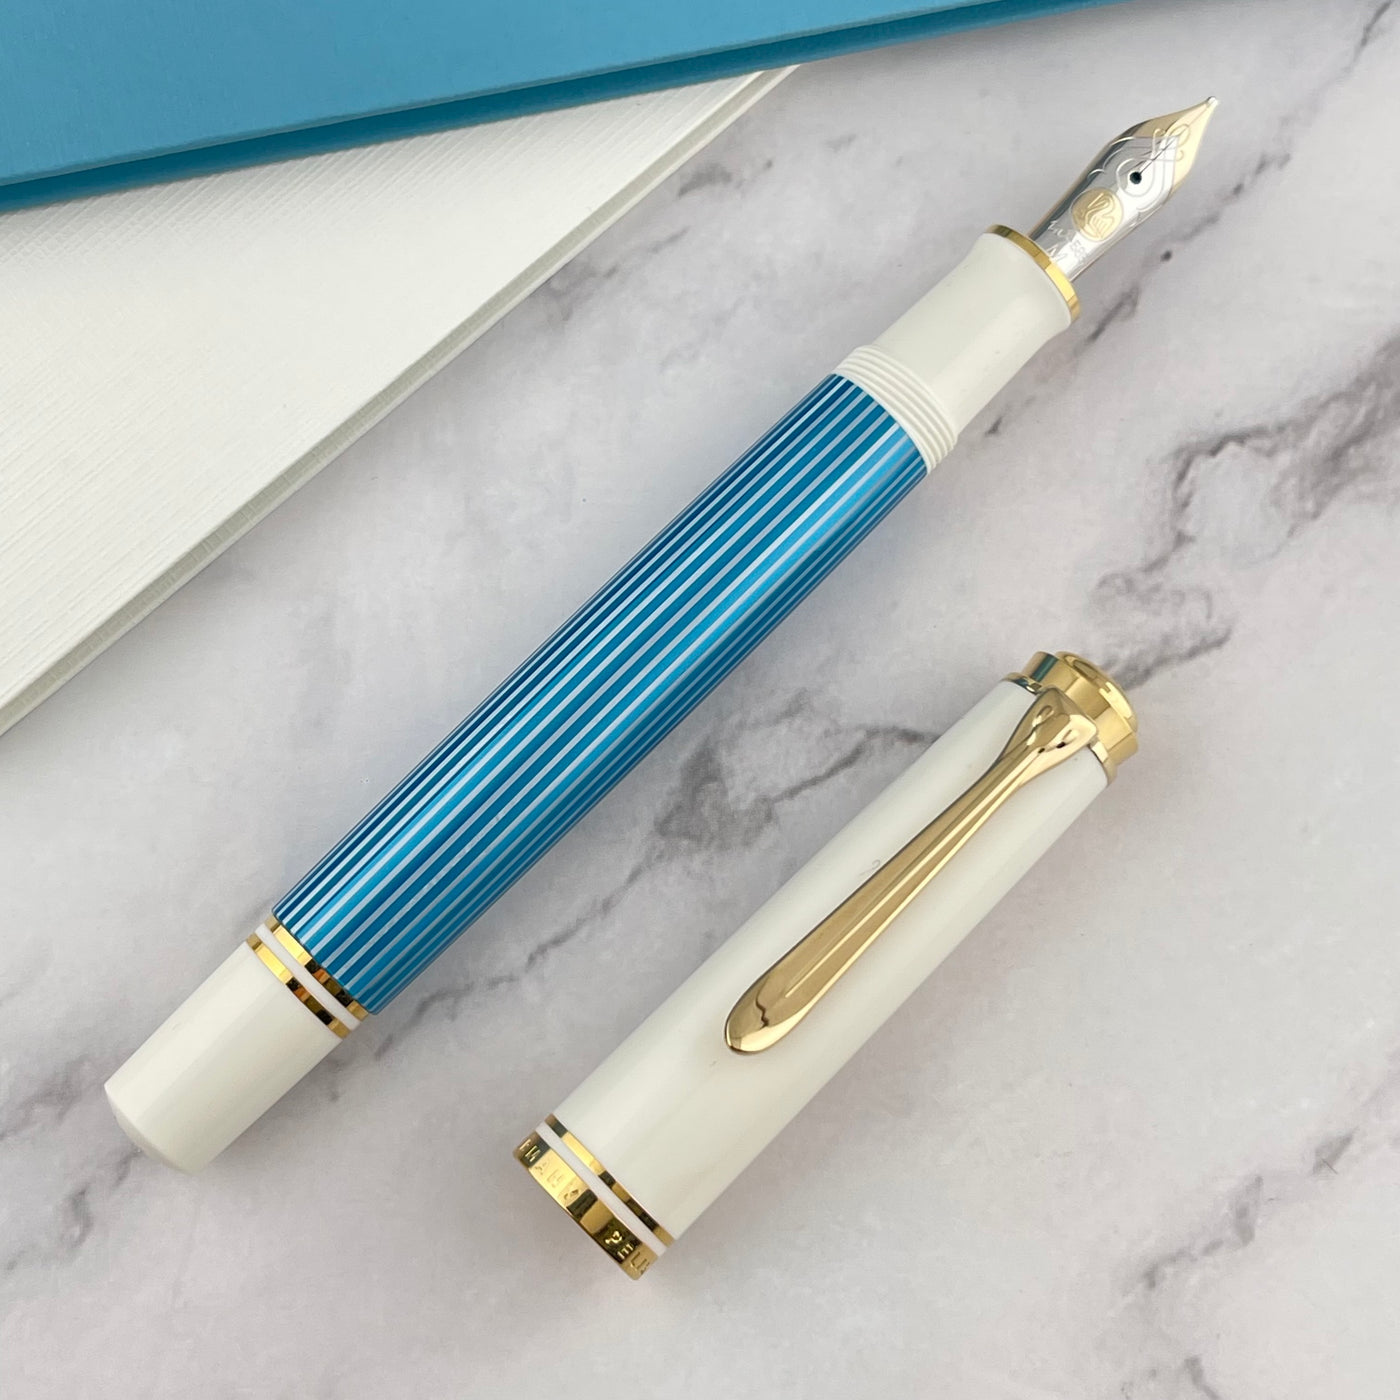 Pelikan Souveran M600 Fountain pen - Turquoise / White (Special Edition)